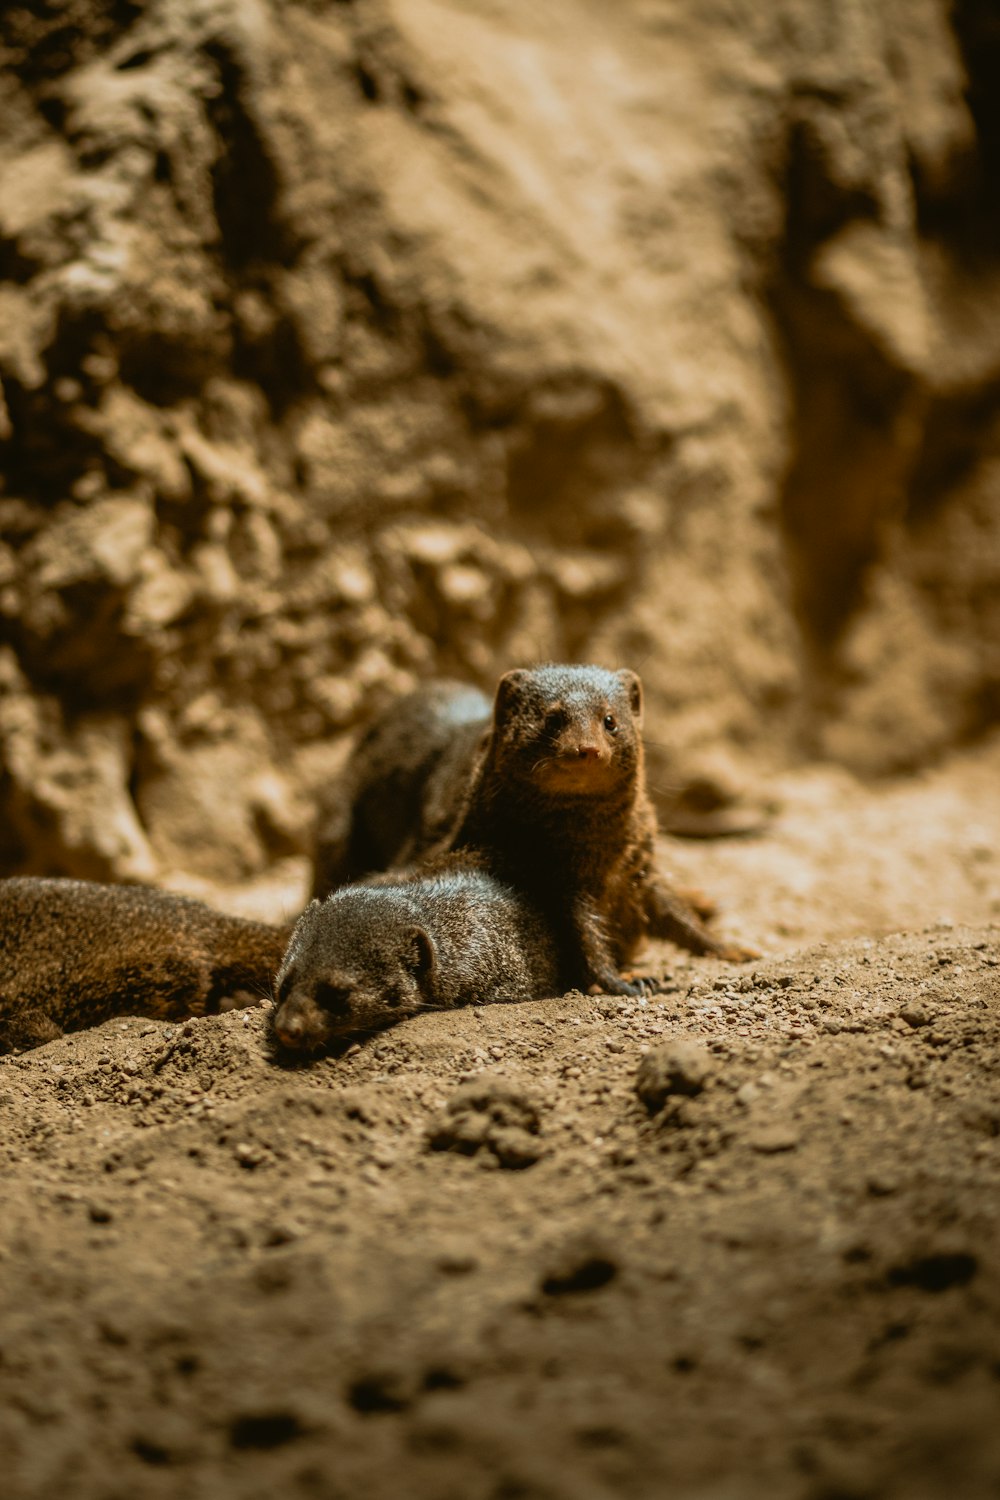 brown and black animal on brown sand during daytime